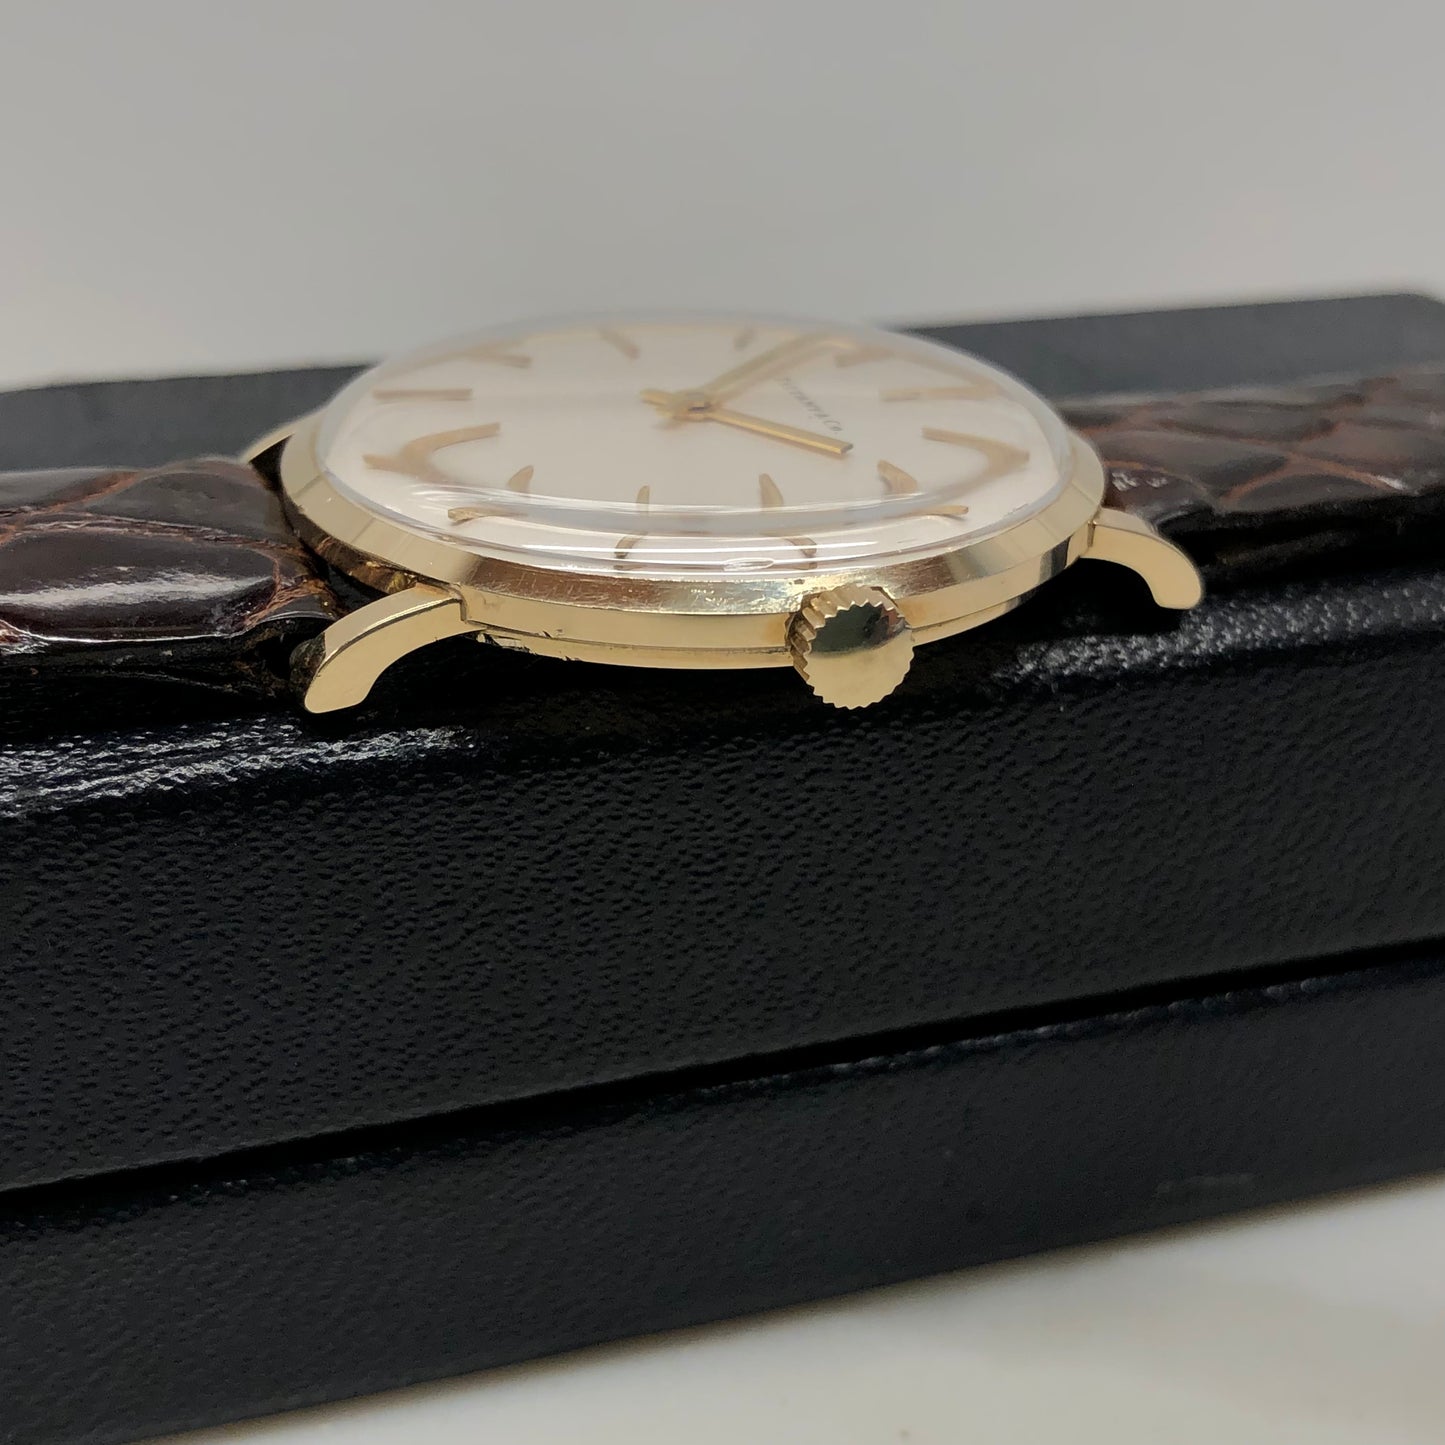 1971 Tiffany & Co. 14K Yellow Gold Dress Wristwatch with Original Box - Hashtag Watch Company